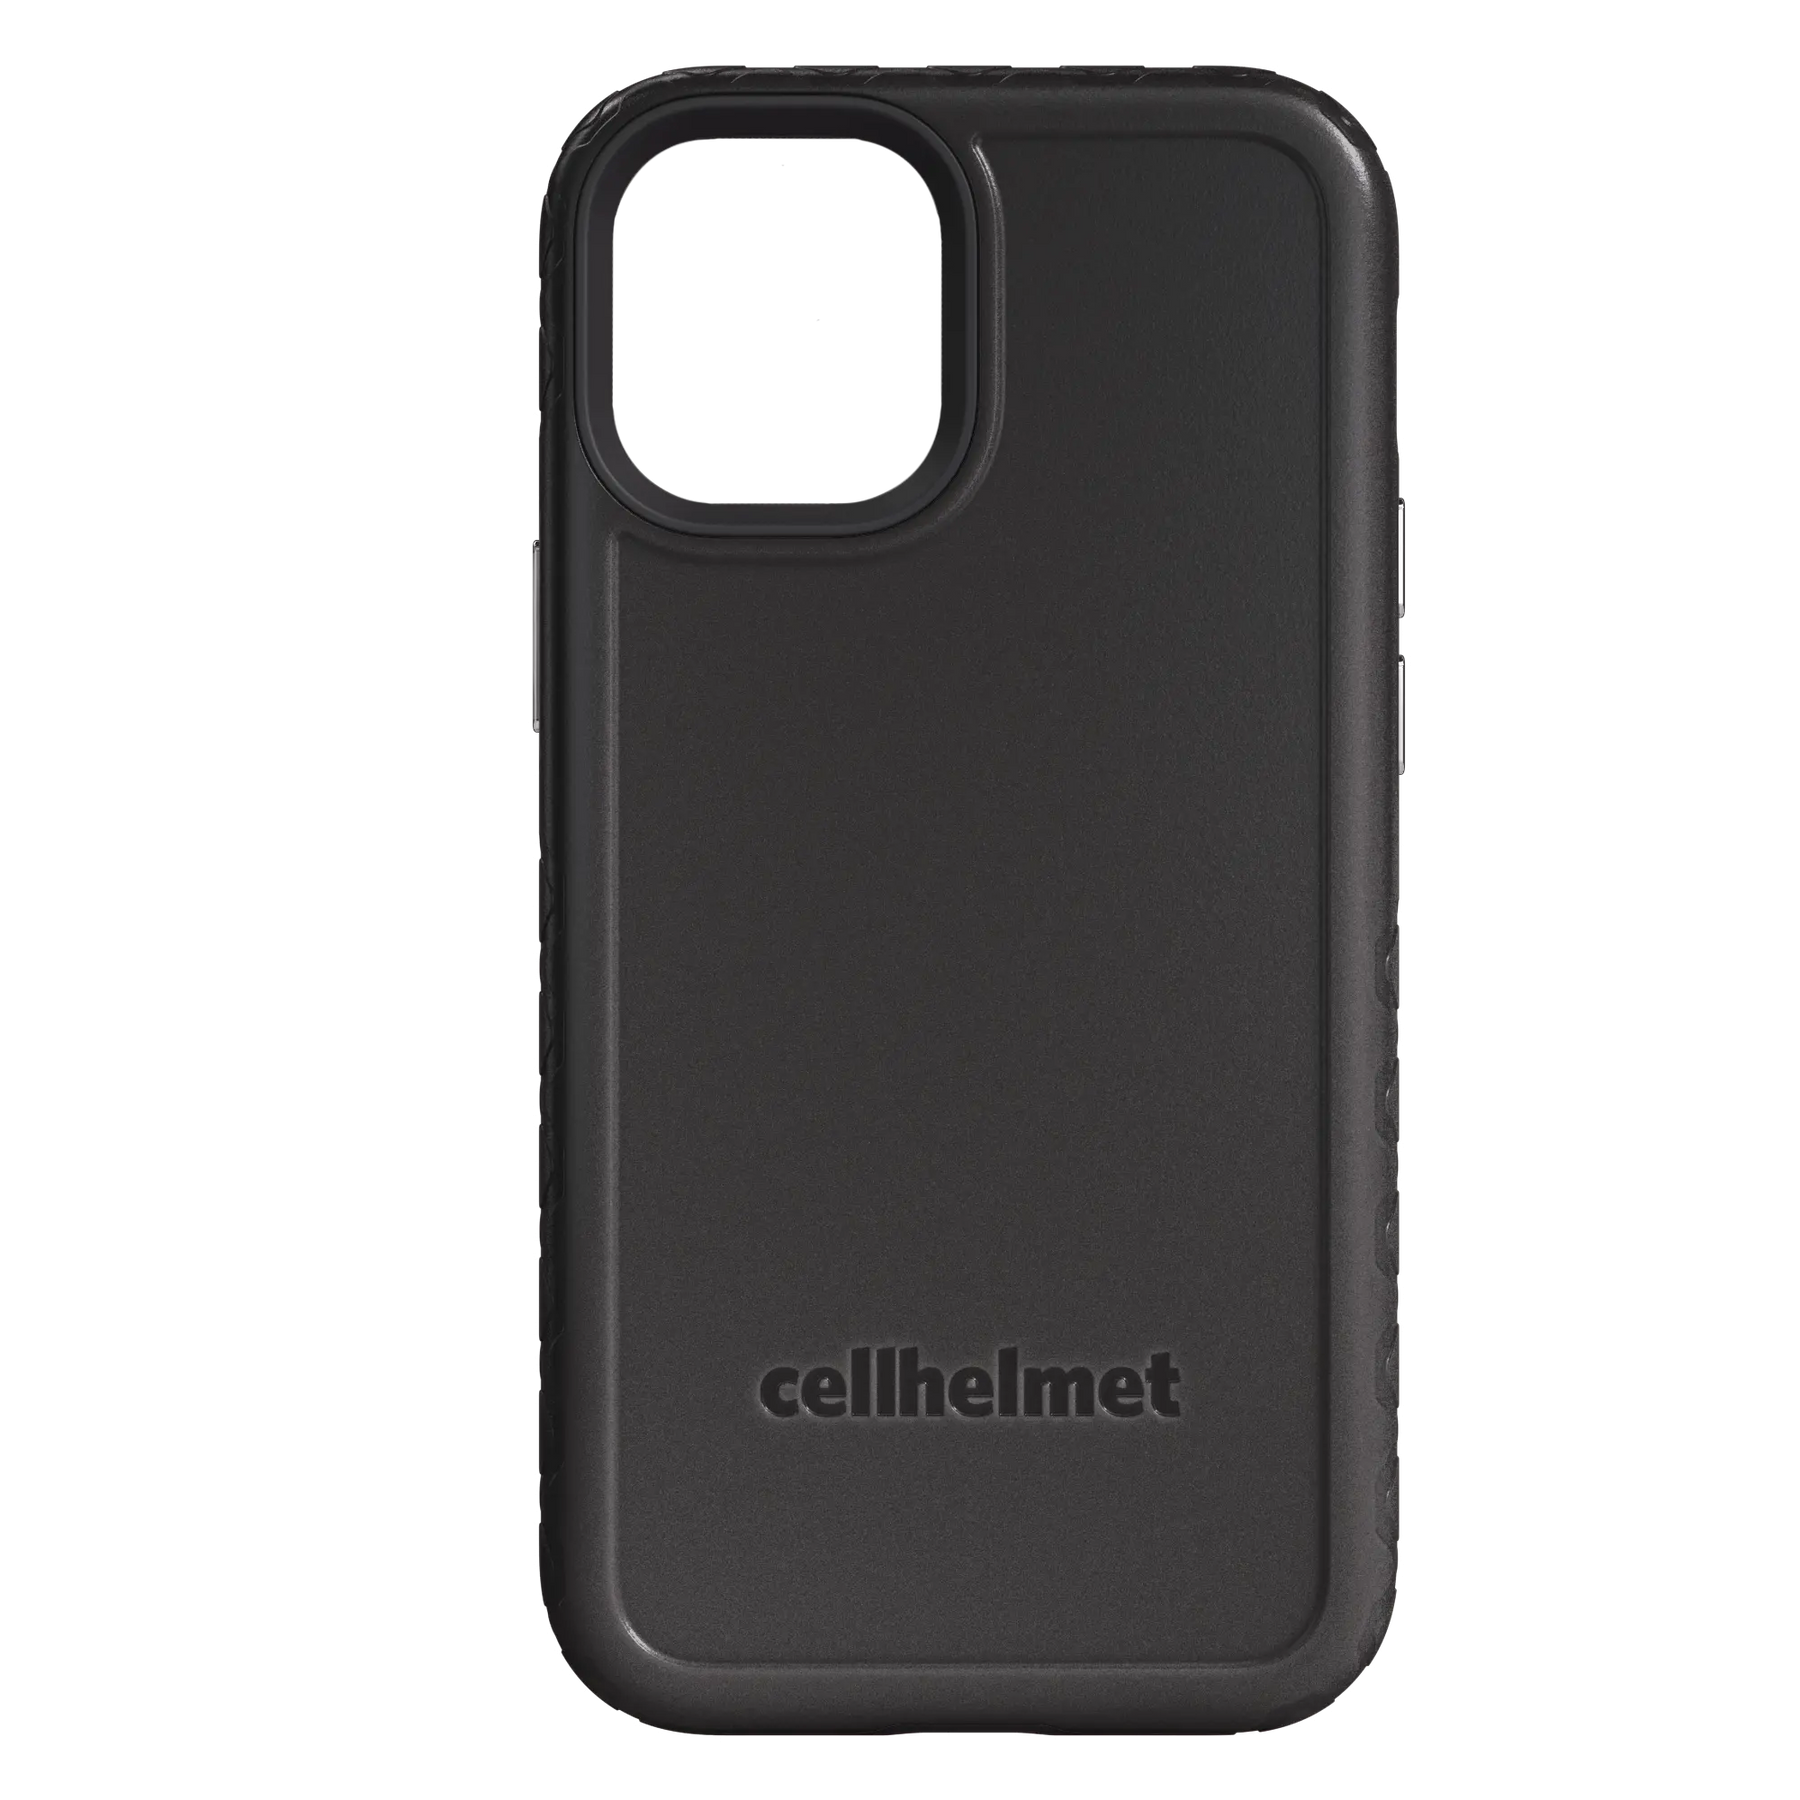 Black cellhelmet Customizable Case for iPhone 12 Mini